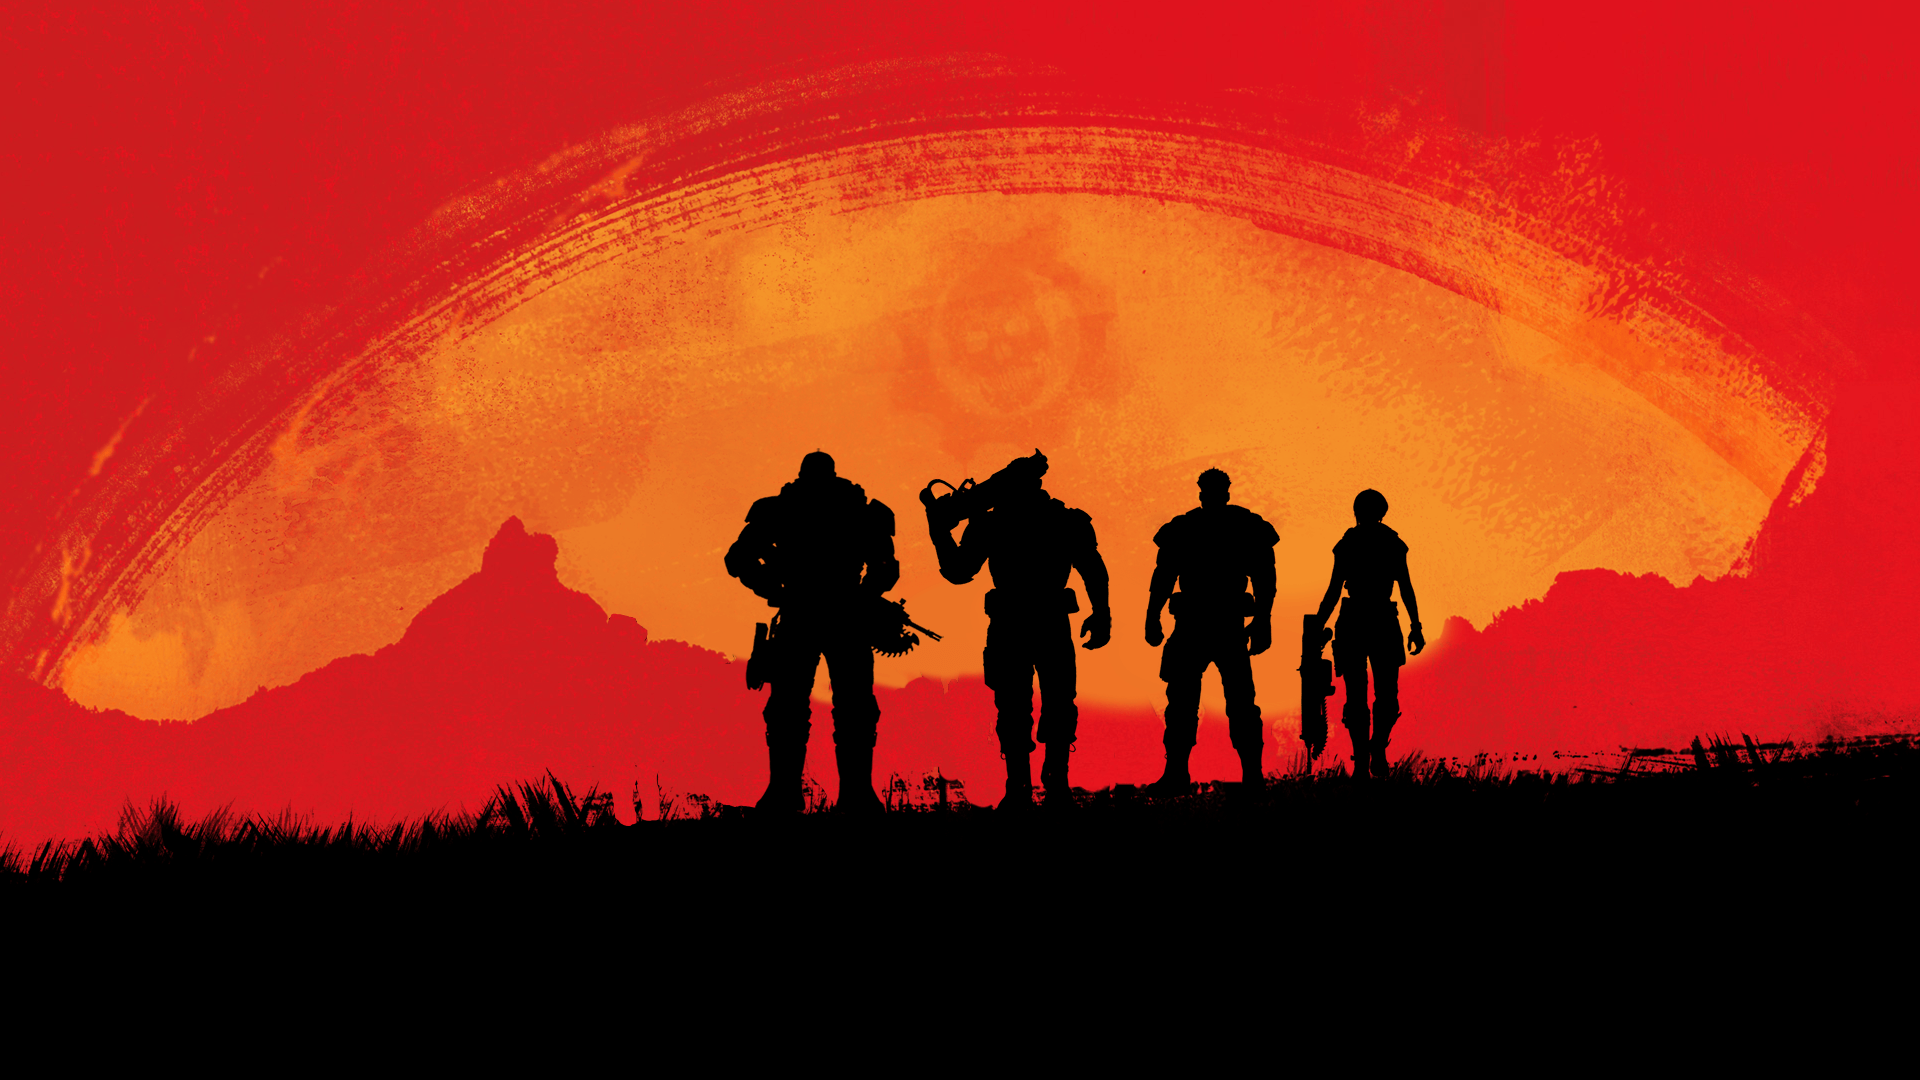 Red Dead Redemption 2 Wallpaper .wallpaperaccess.com